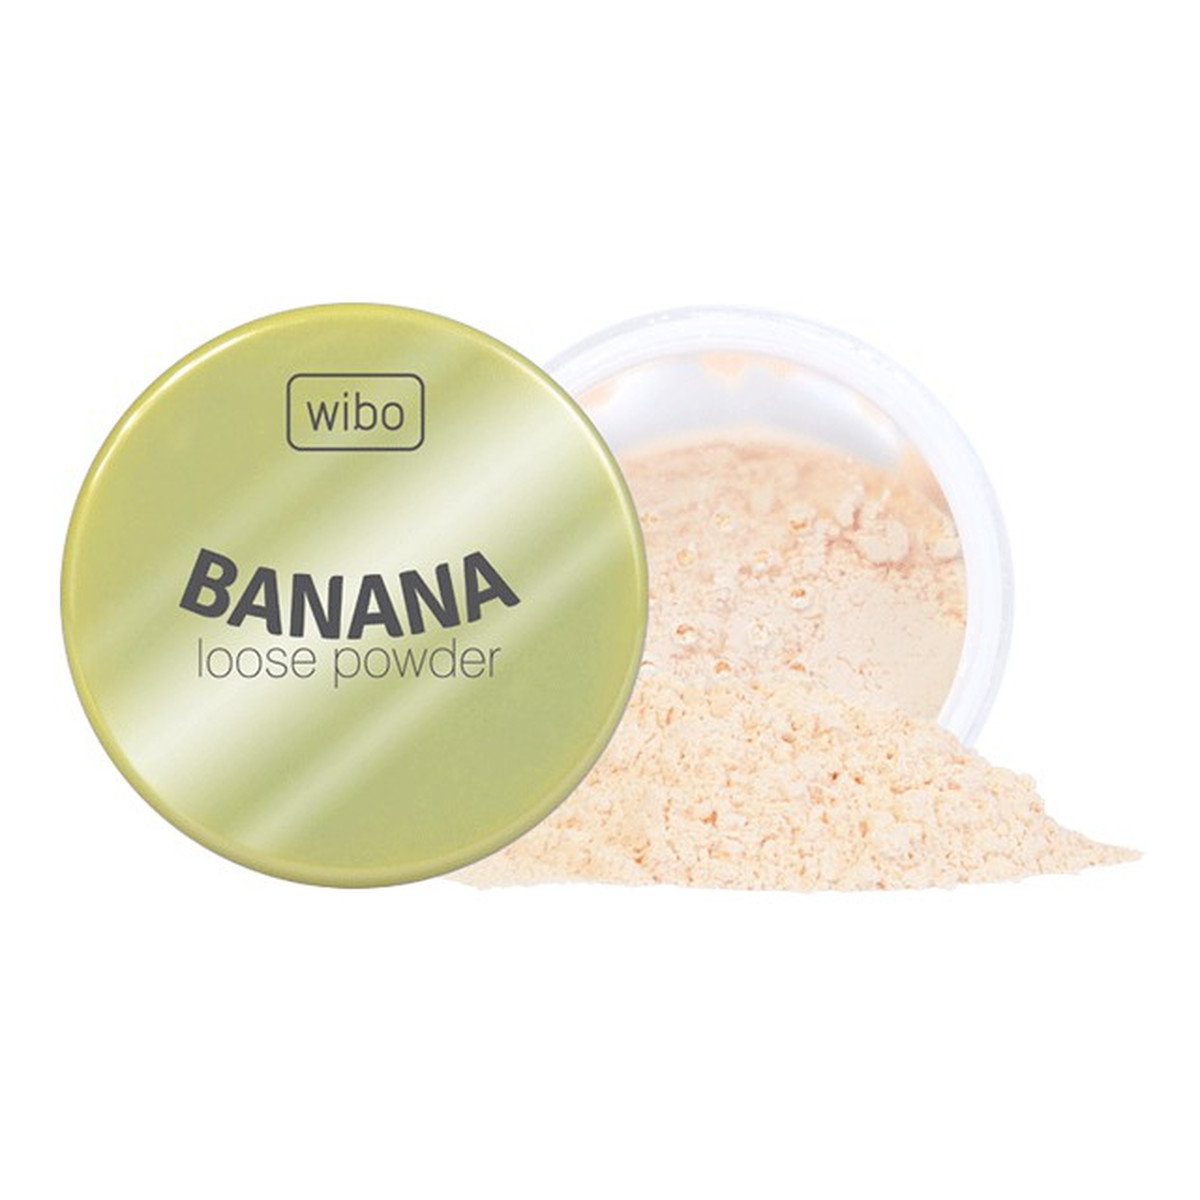 Wibo Banana Loose Powder PUDER SYPKI BANANOWY 5,5g 5.5g